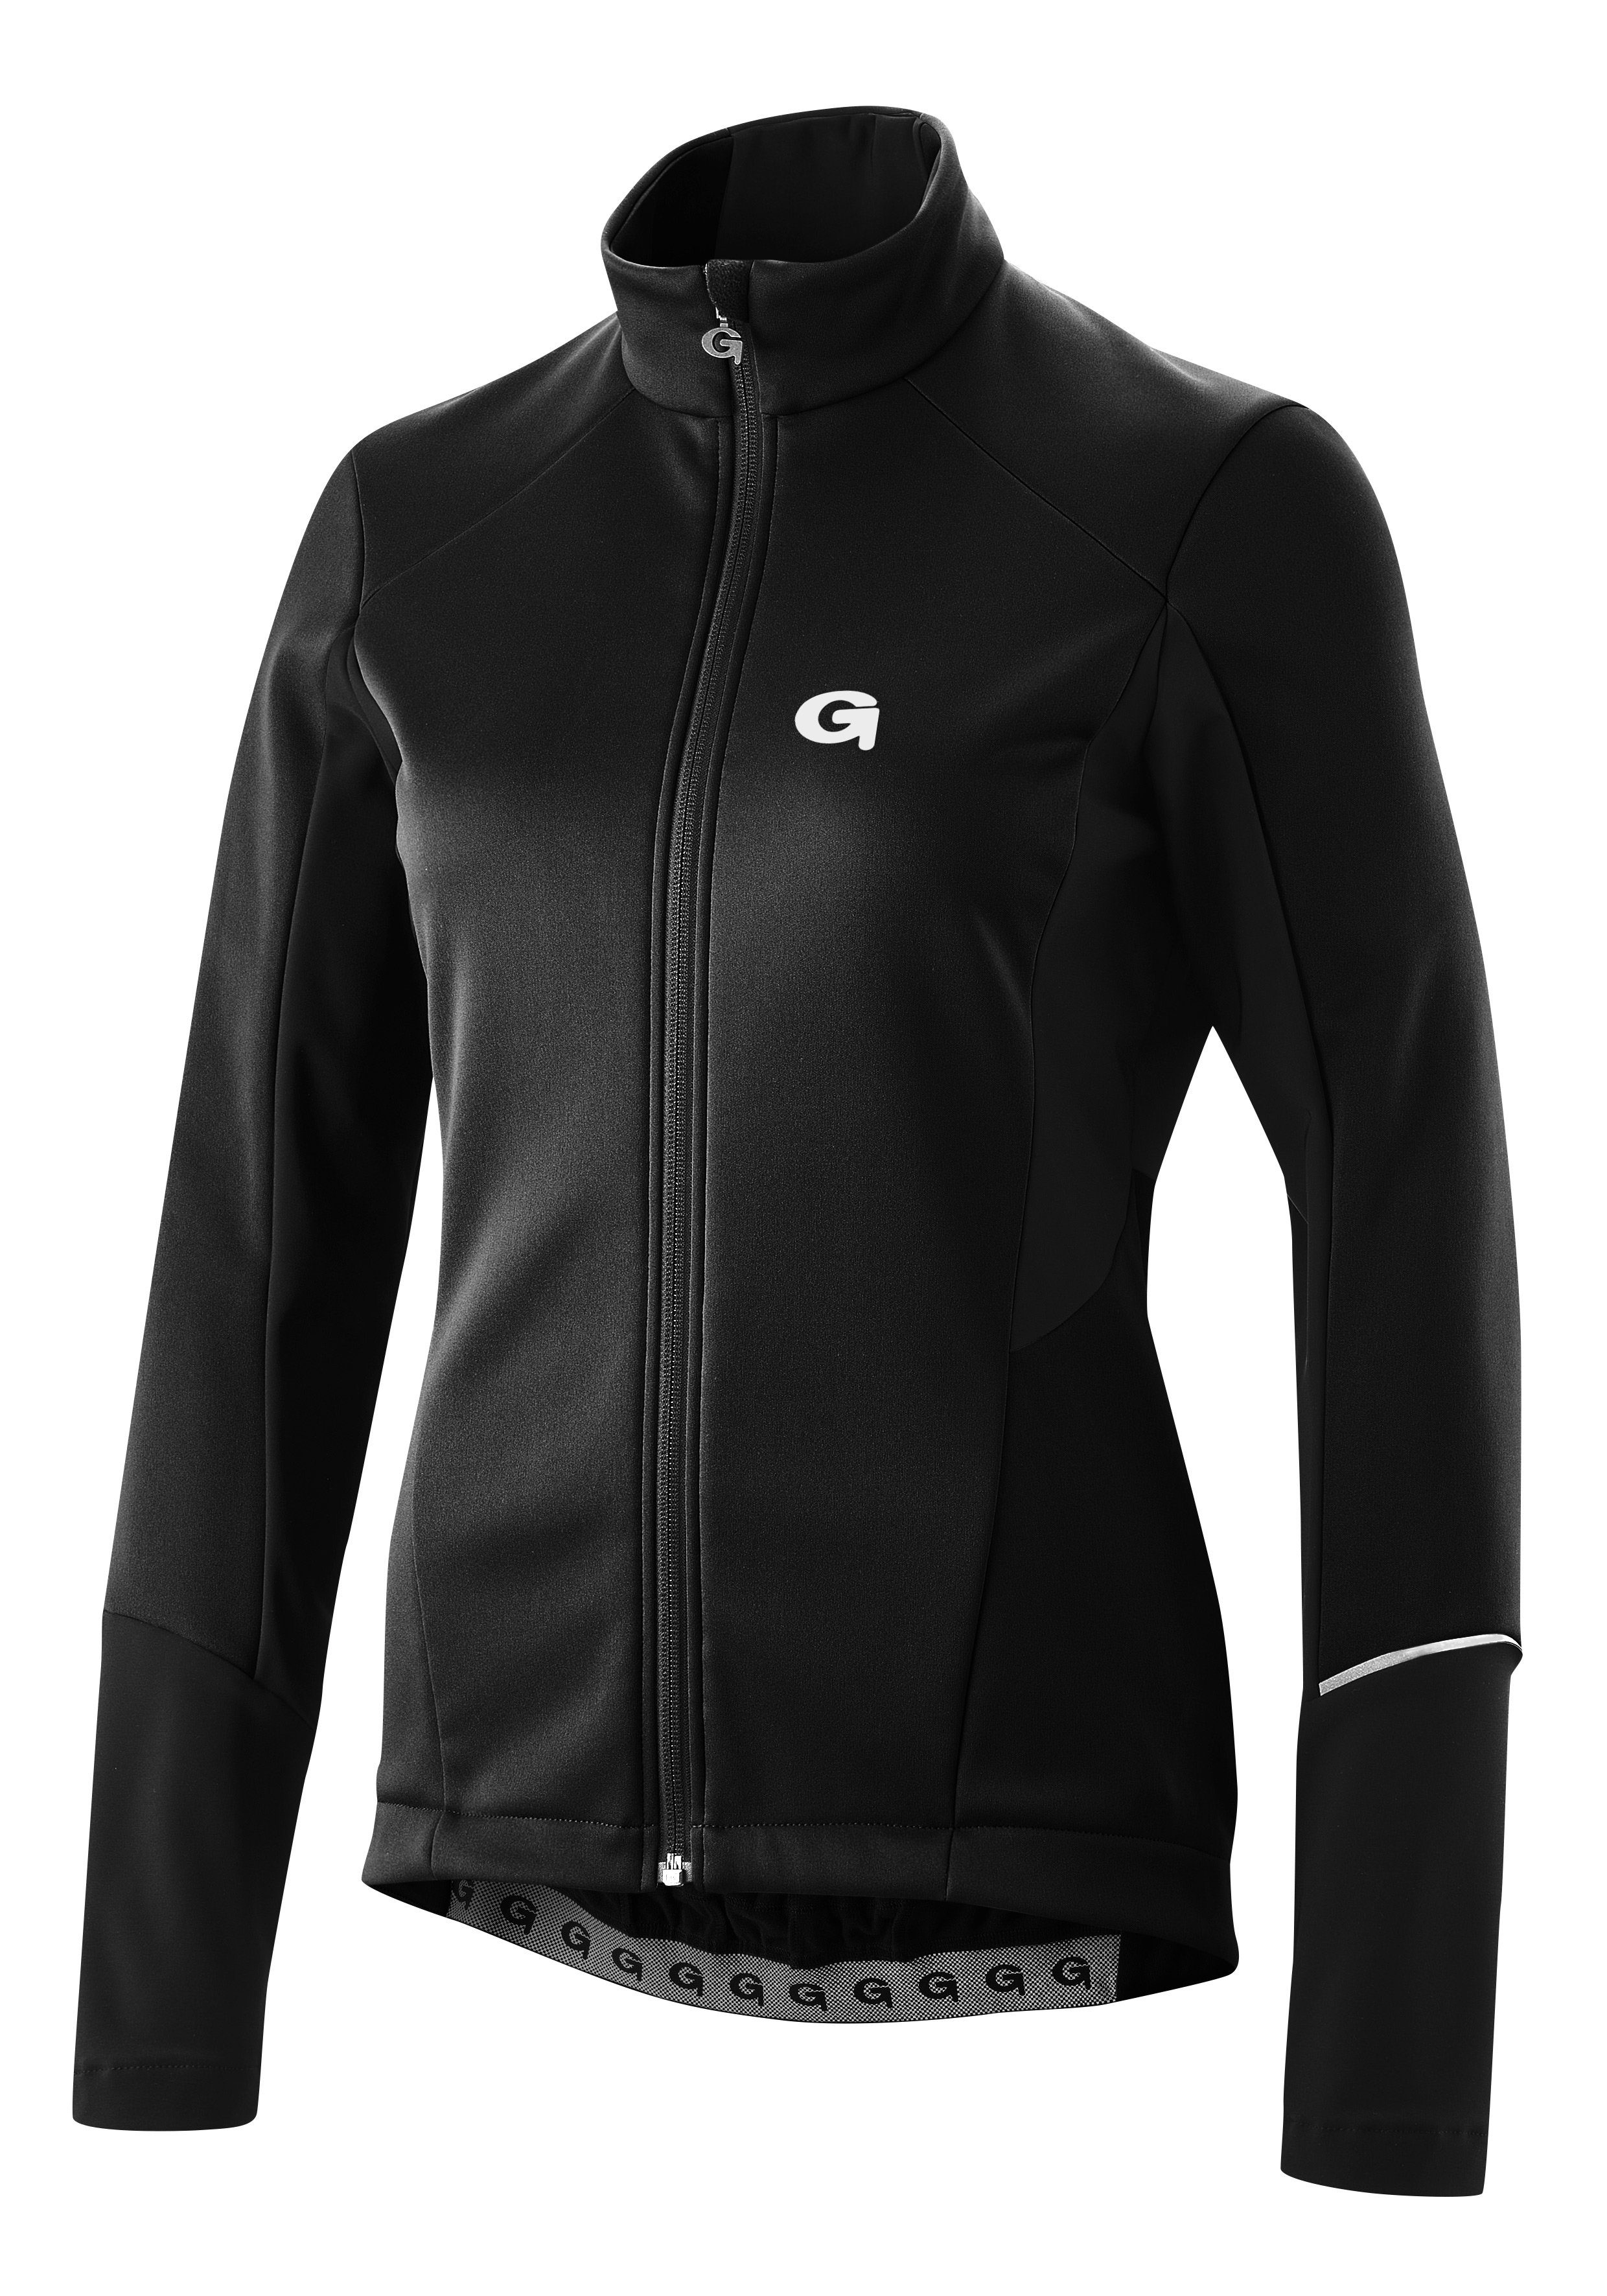 Gonso Fahrradjacke FURIANI Softshell-Jacke, schwarz atmungsaktiv und wasserabweisend Windjacke Damen